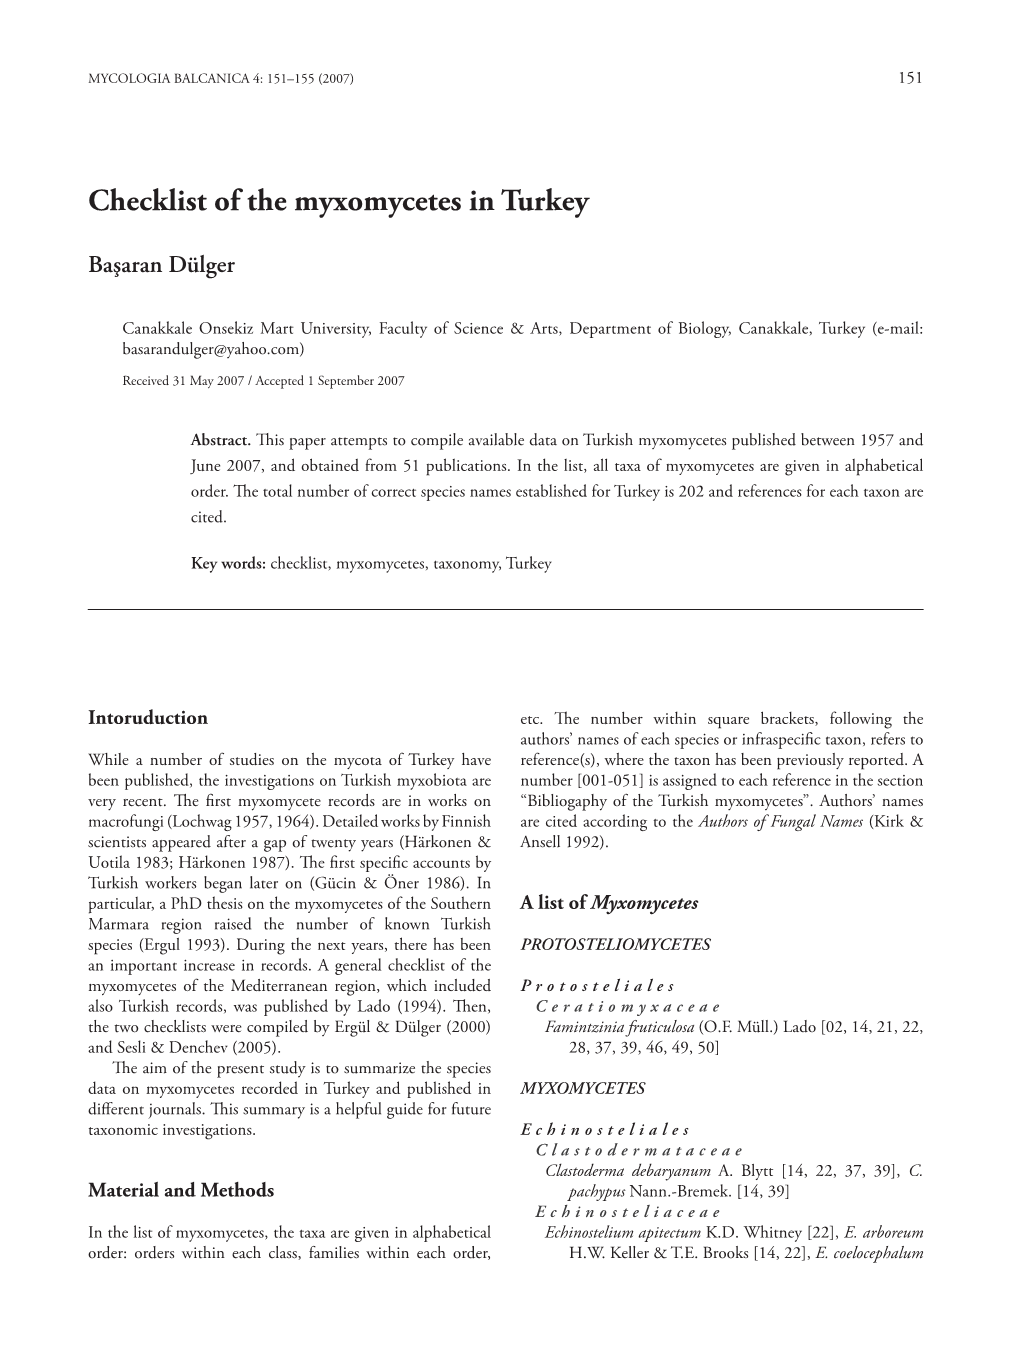 Checklist of the Myxomycetes in Turkey